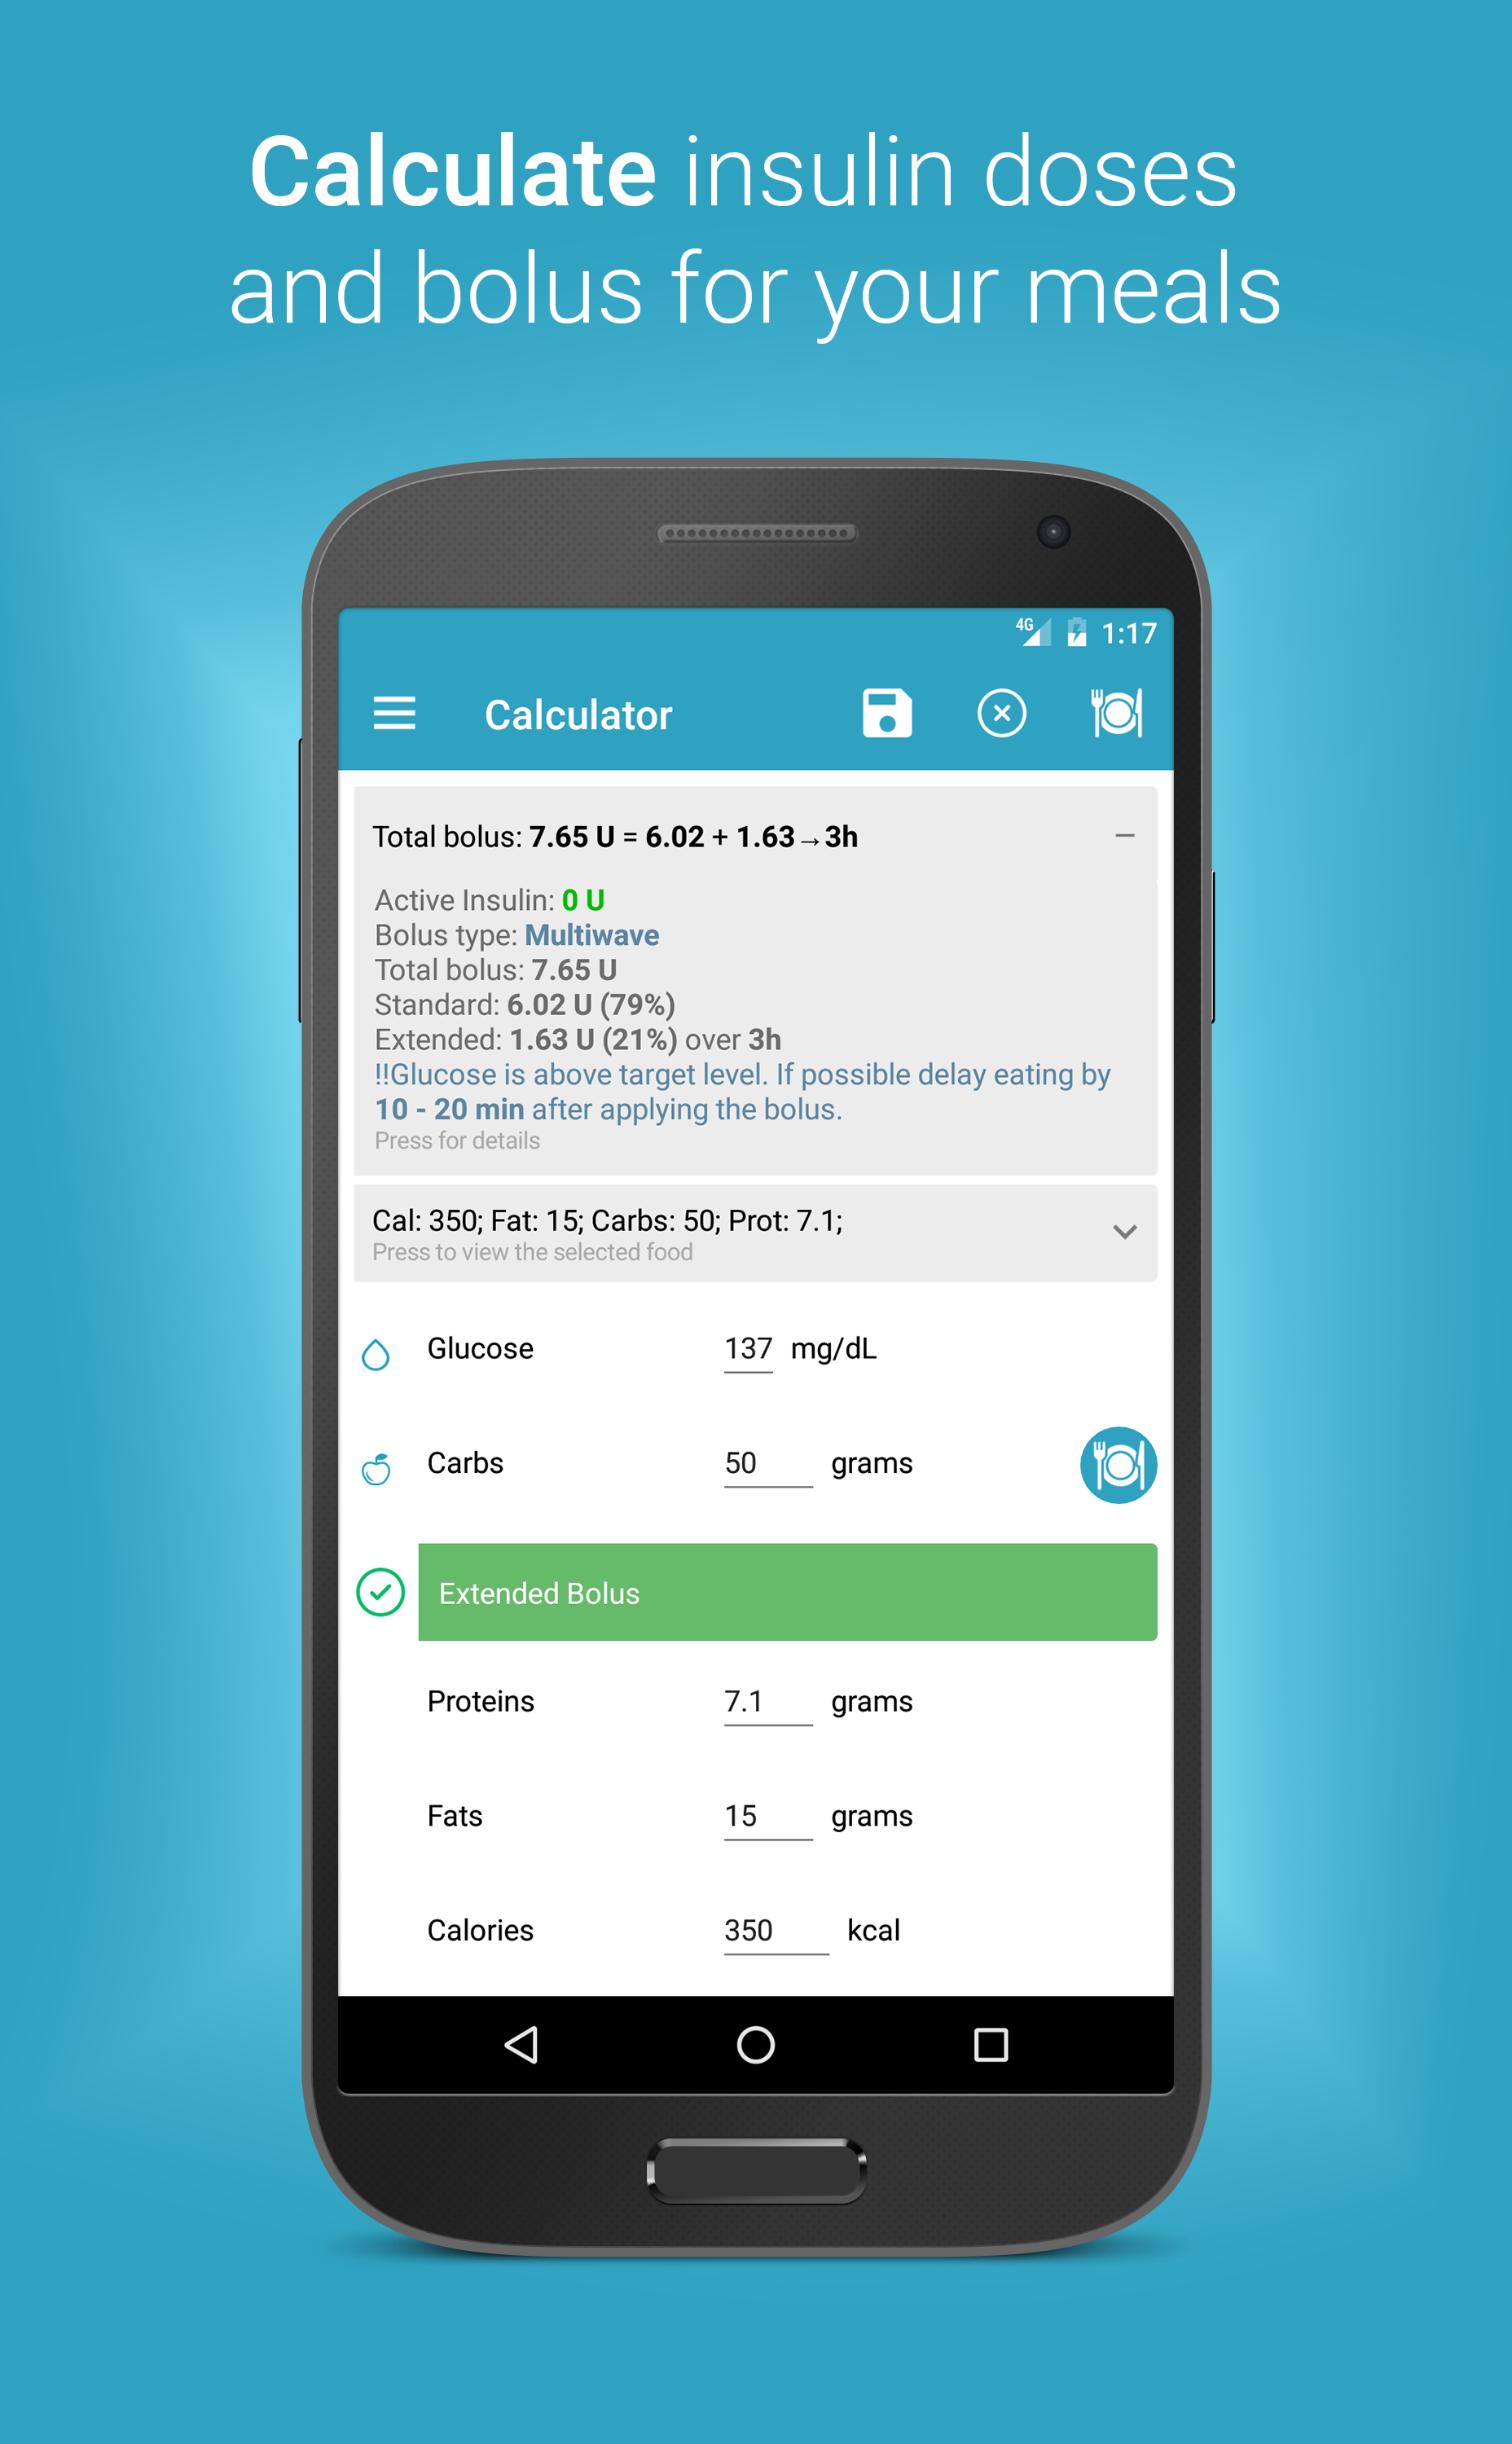 Android application Diabetes:M - Management & Blood Sugar Tracker App screenshort